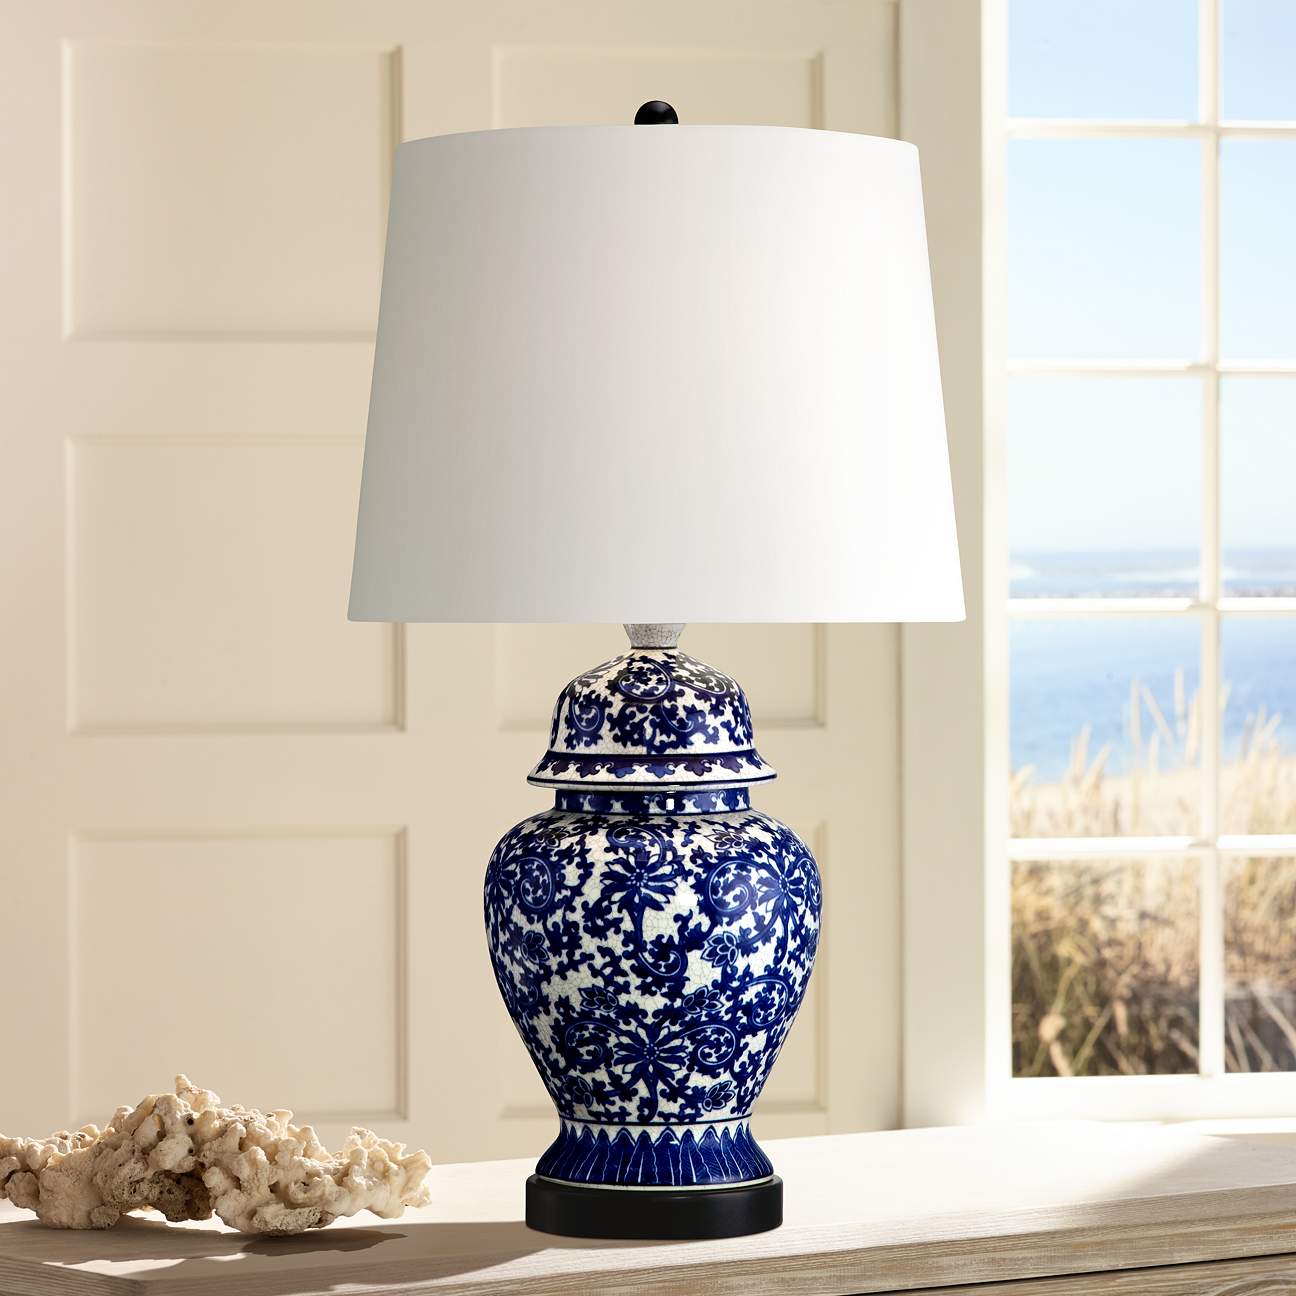 Blue and White Porcelain Temple Jar Table Lamp R2462 Lamps Plus